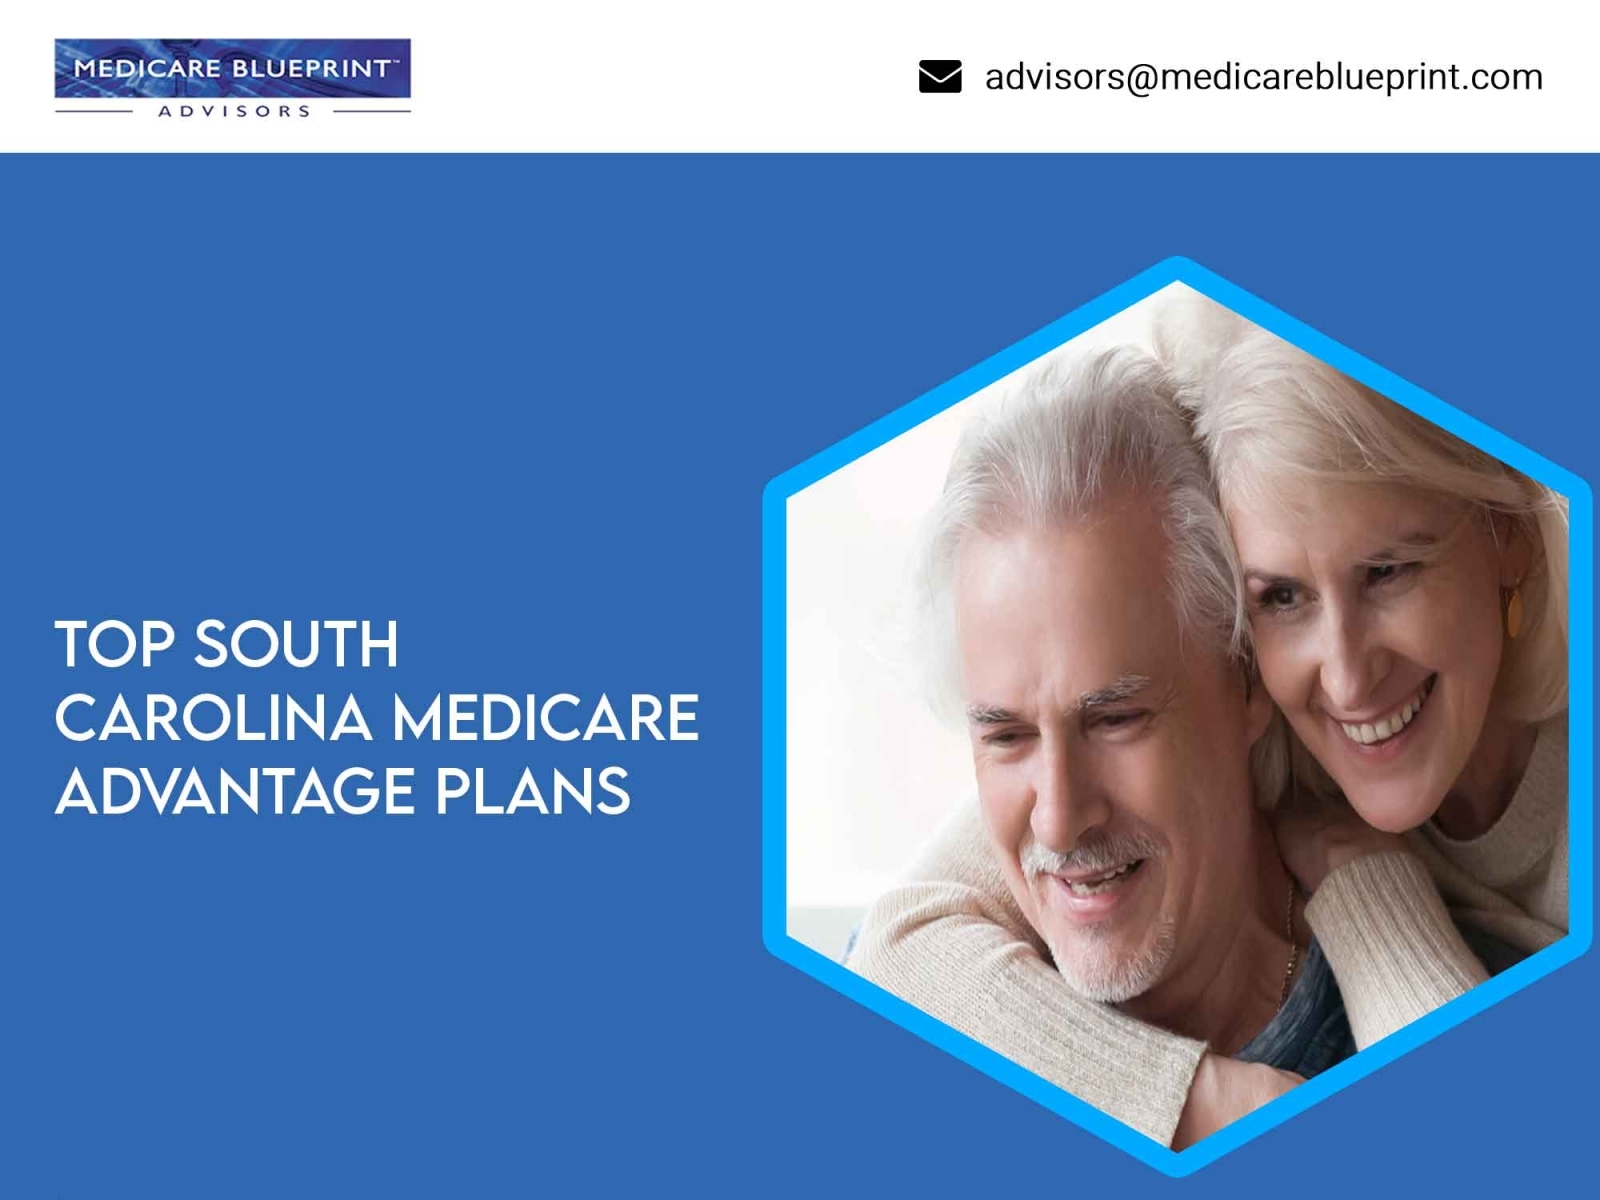 Top South Carolina Medicare Advantage Plans by Medicare Blueprint on